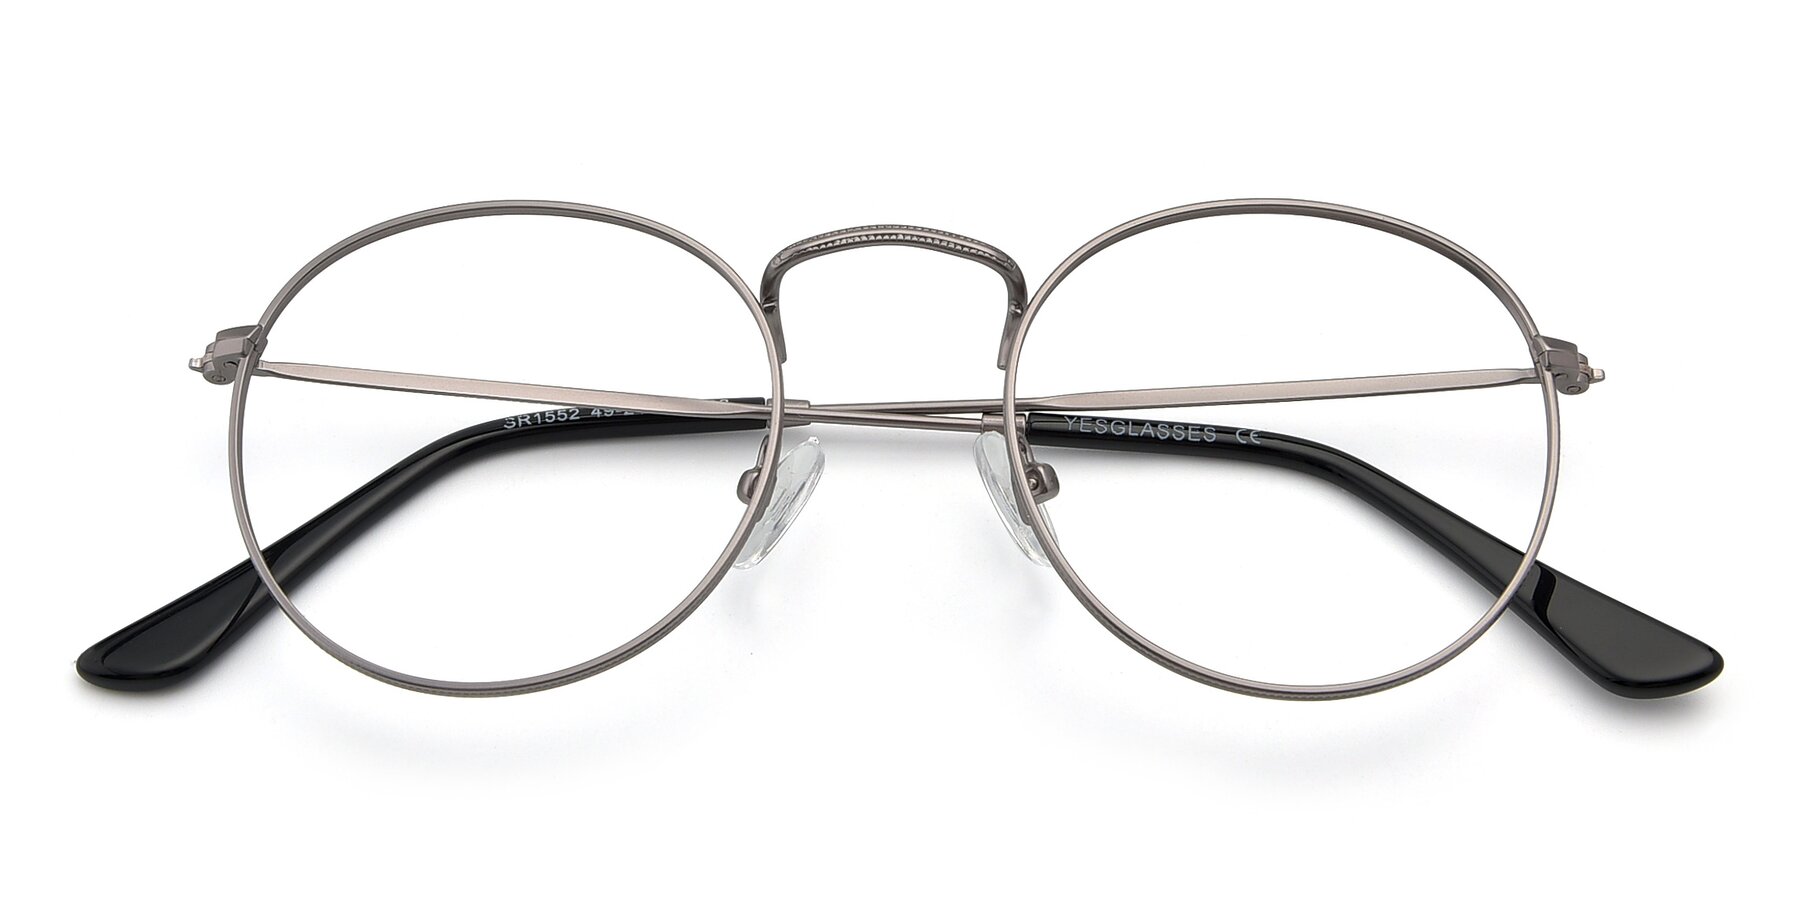 Gunmetal Retro-Vintage Thin Round Eyeglasses - SR1552